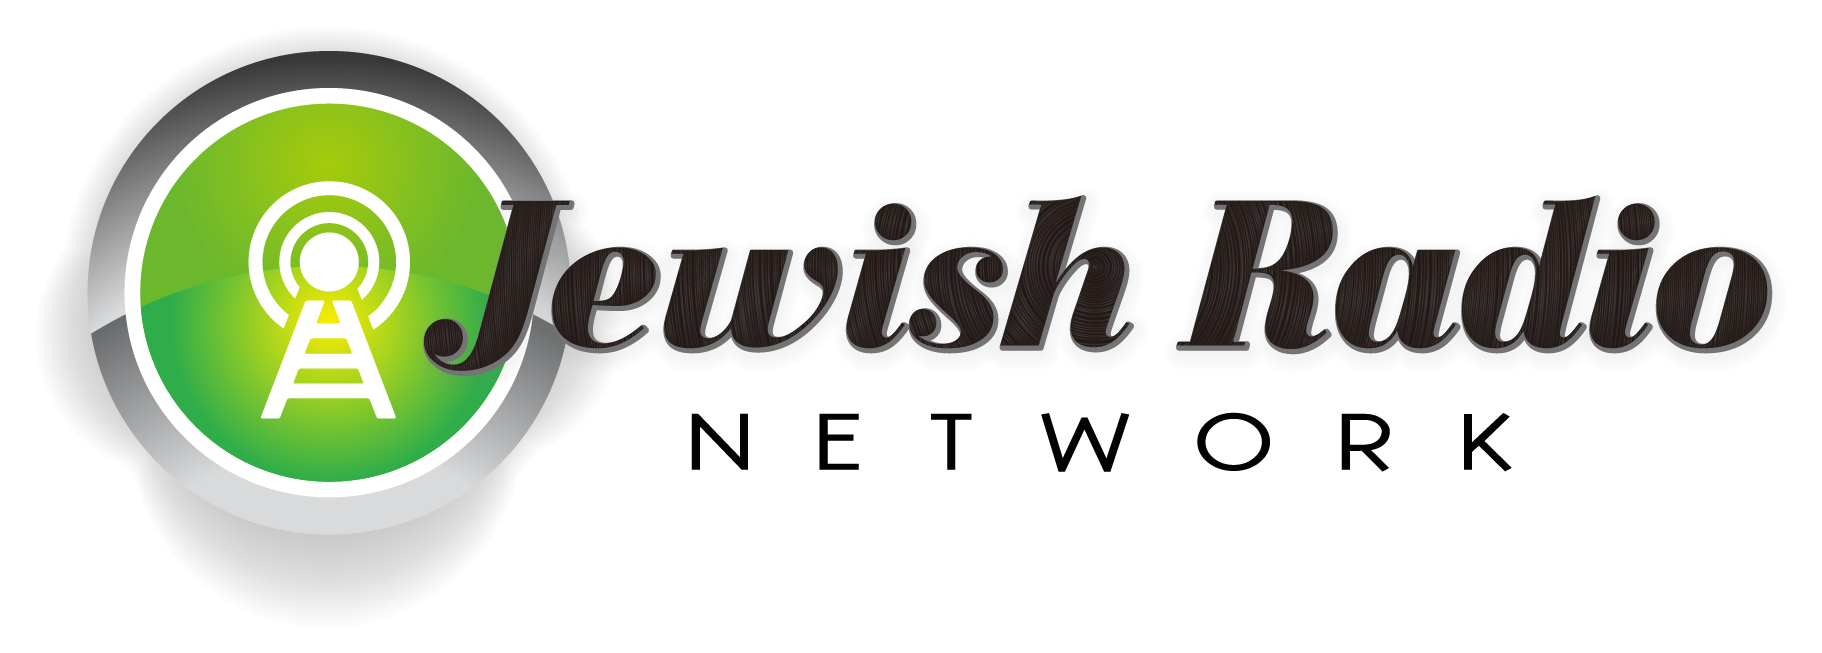 Stream Jewish Funders Network music